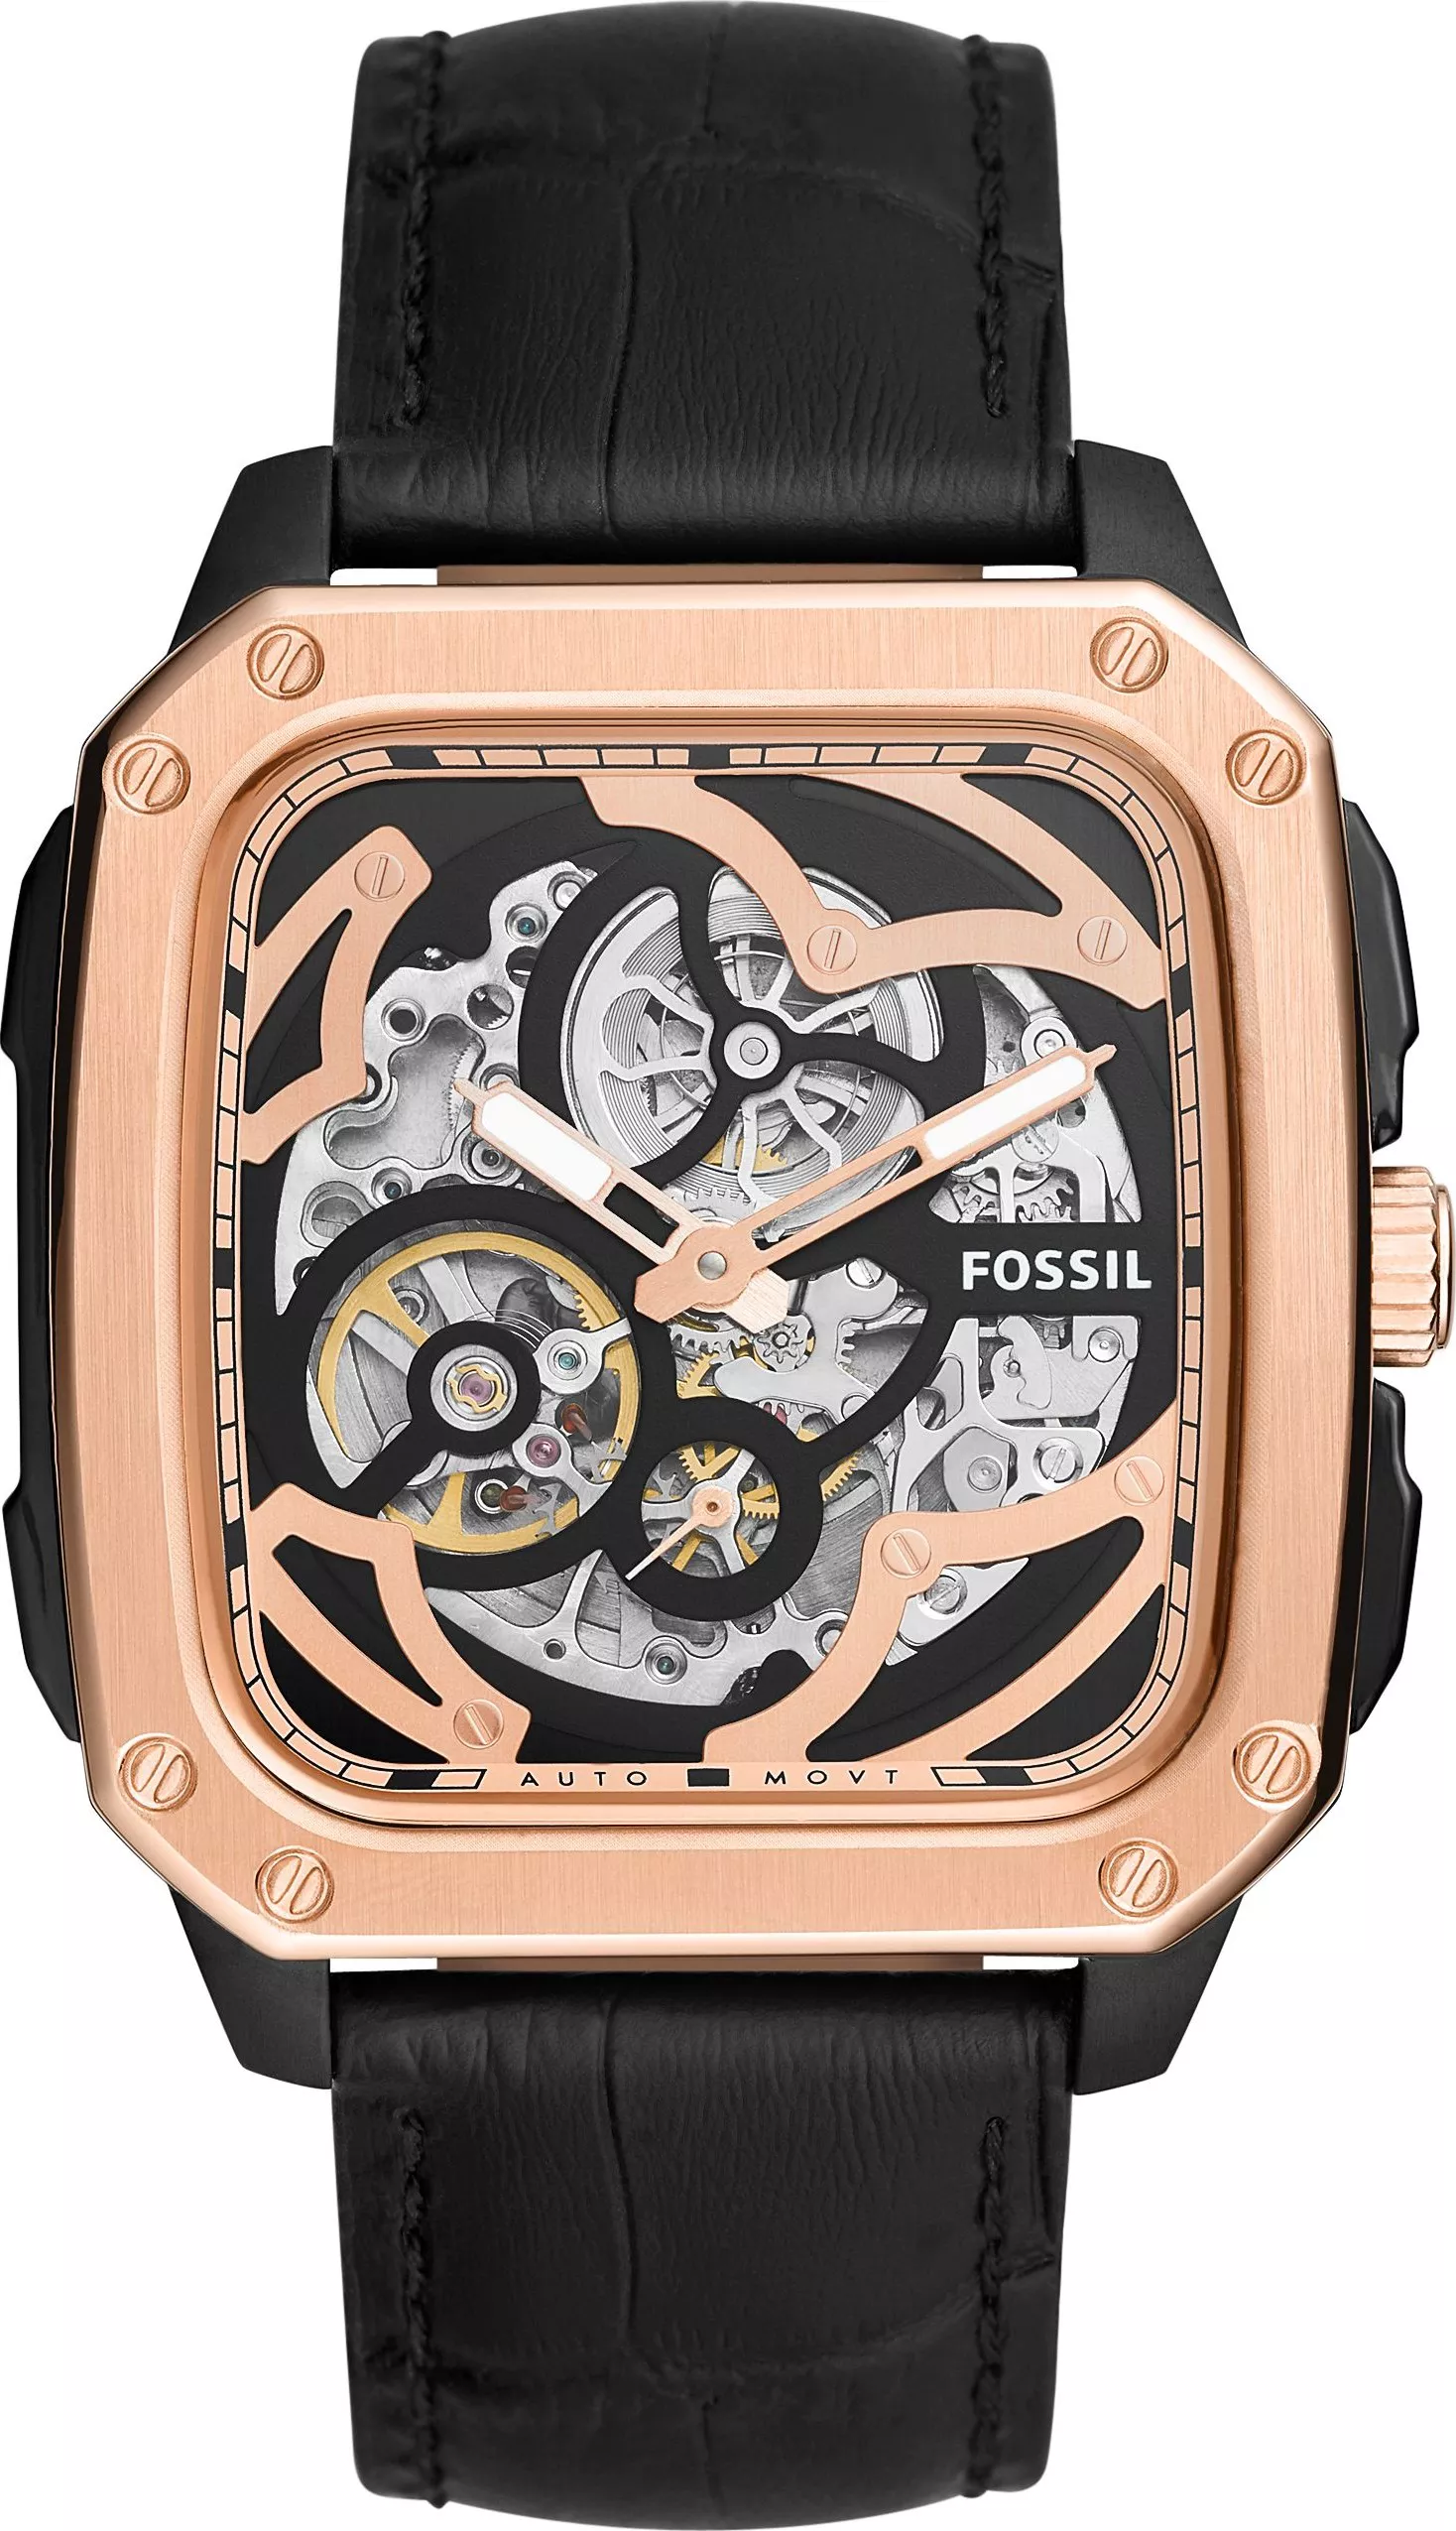 MSP: 102707 Fossil Inscription Automatic Watch 42mm 7,170,000